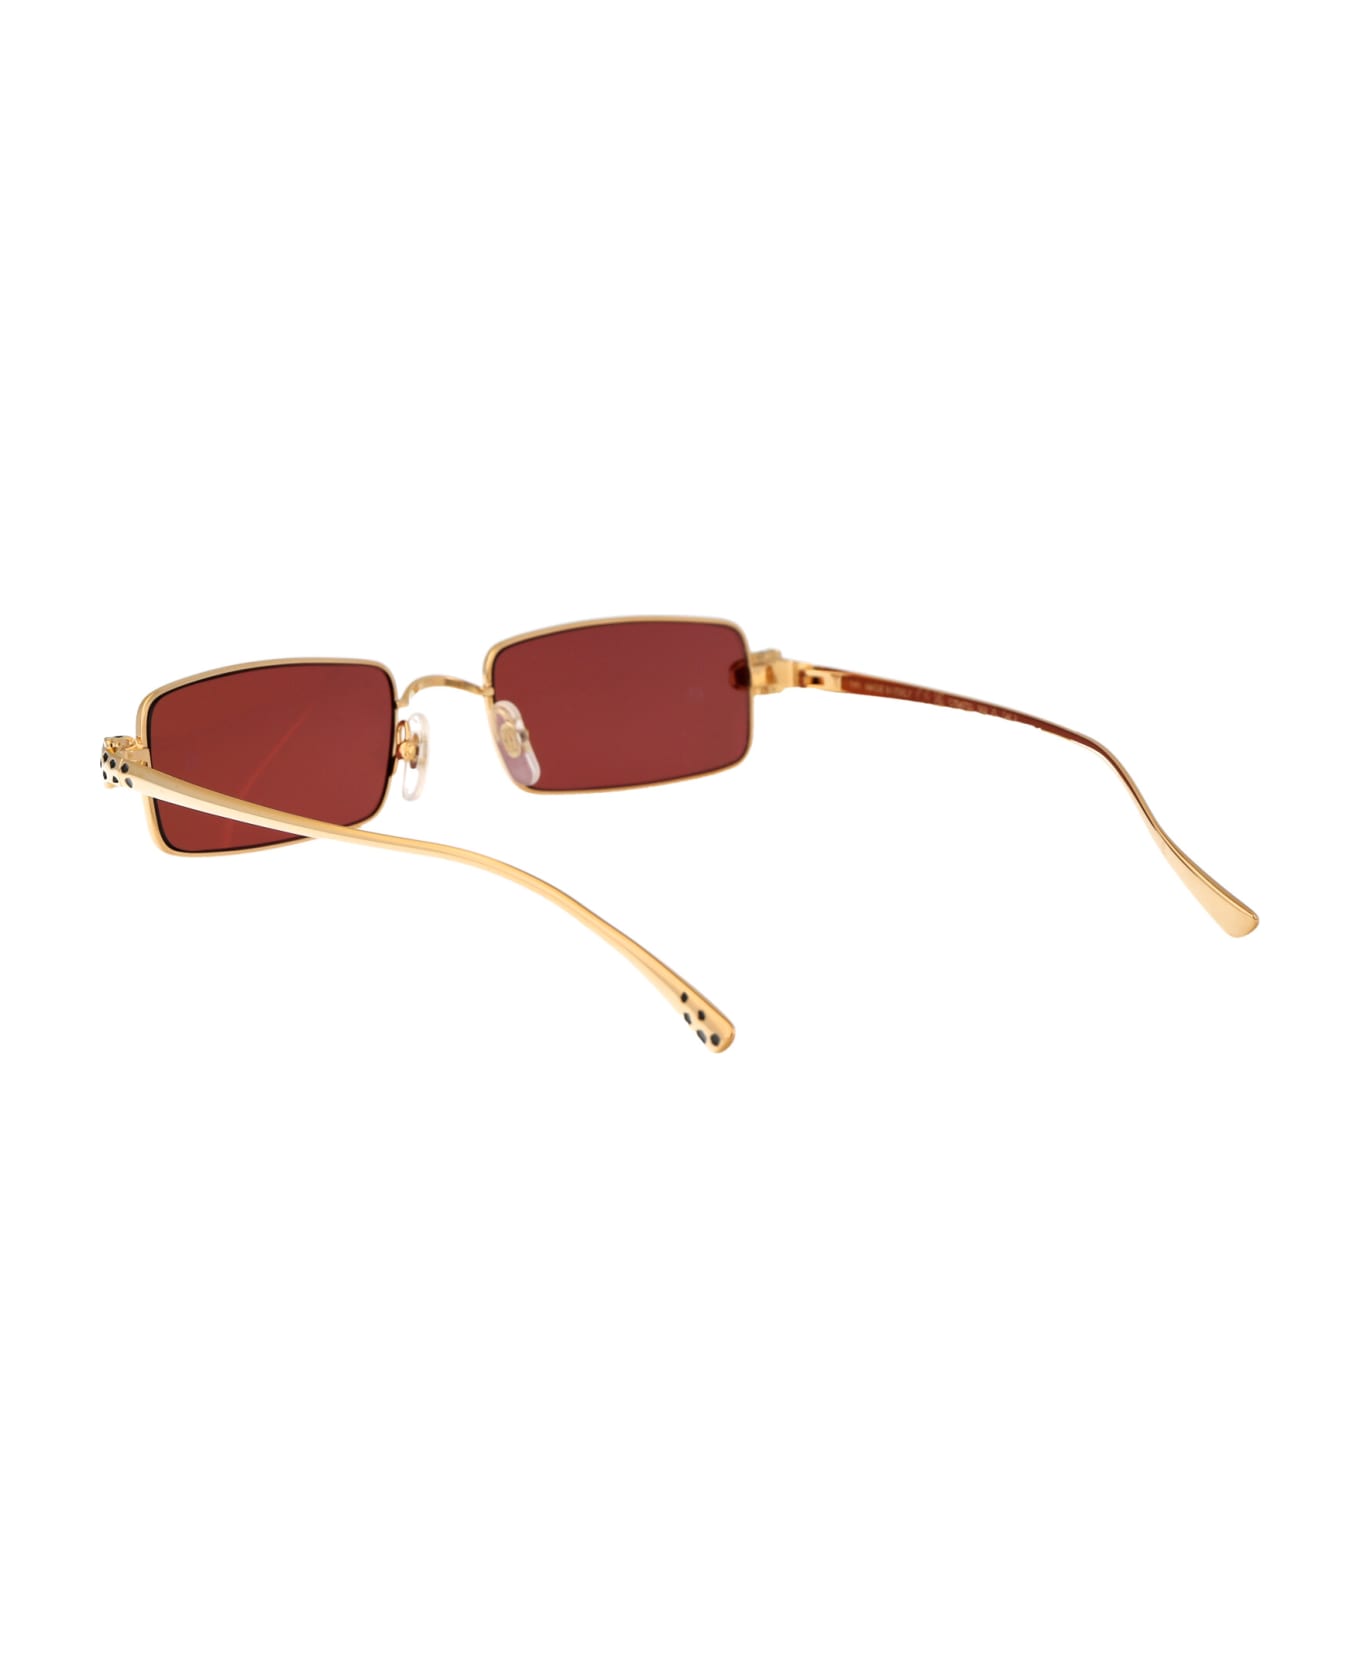 Cartier Eyewear Ct0473s Sunglasses - 002 GOLD GOLD RED